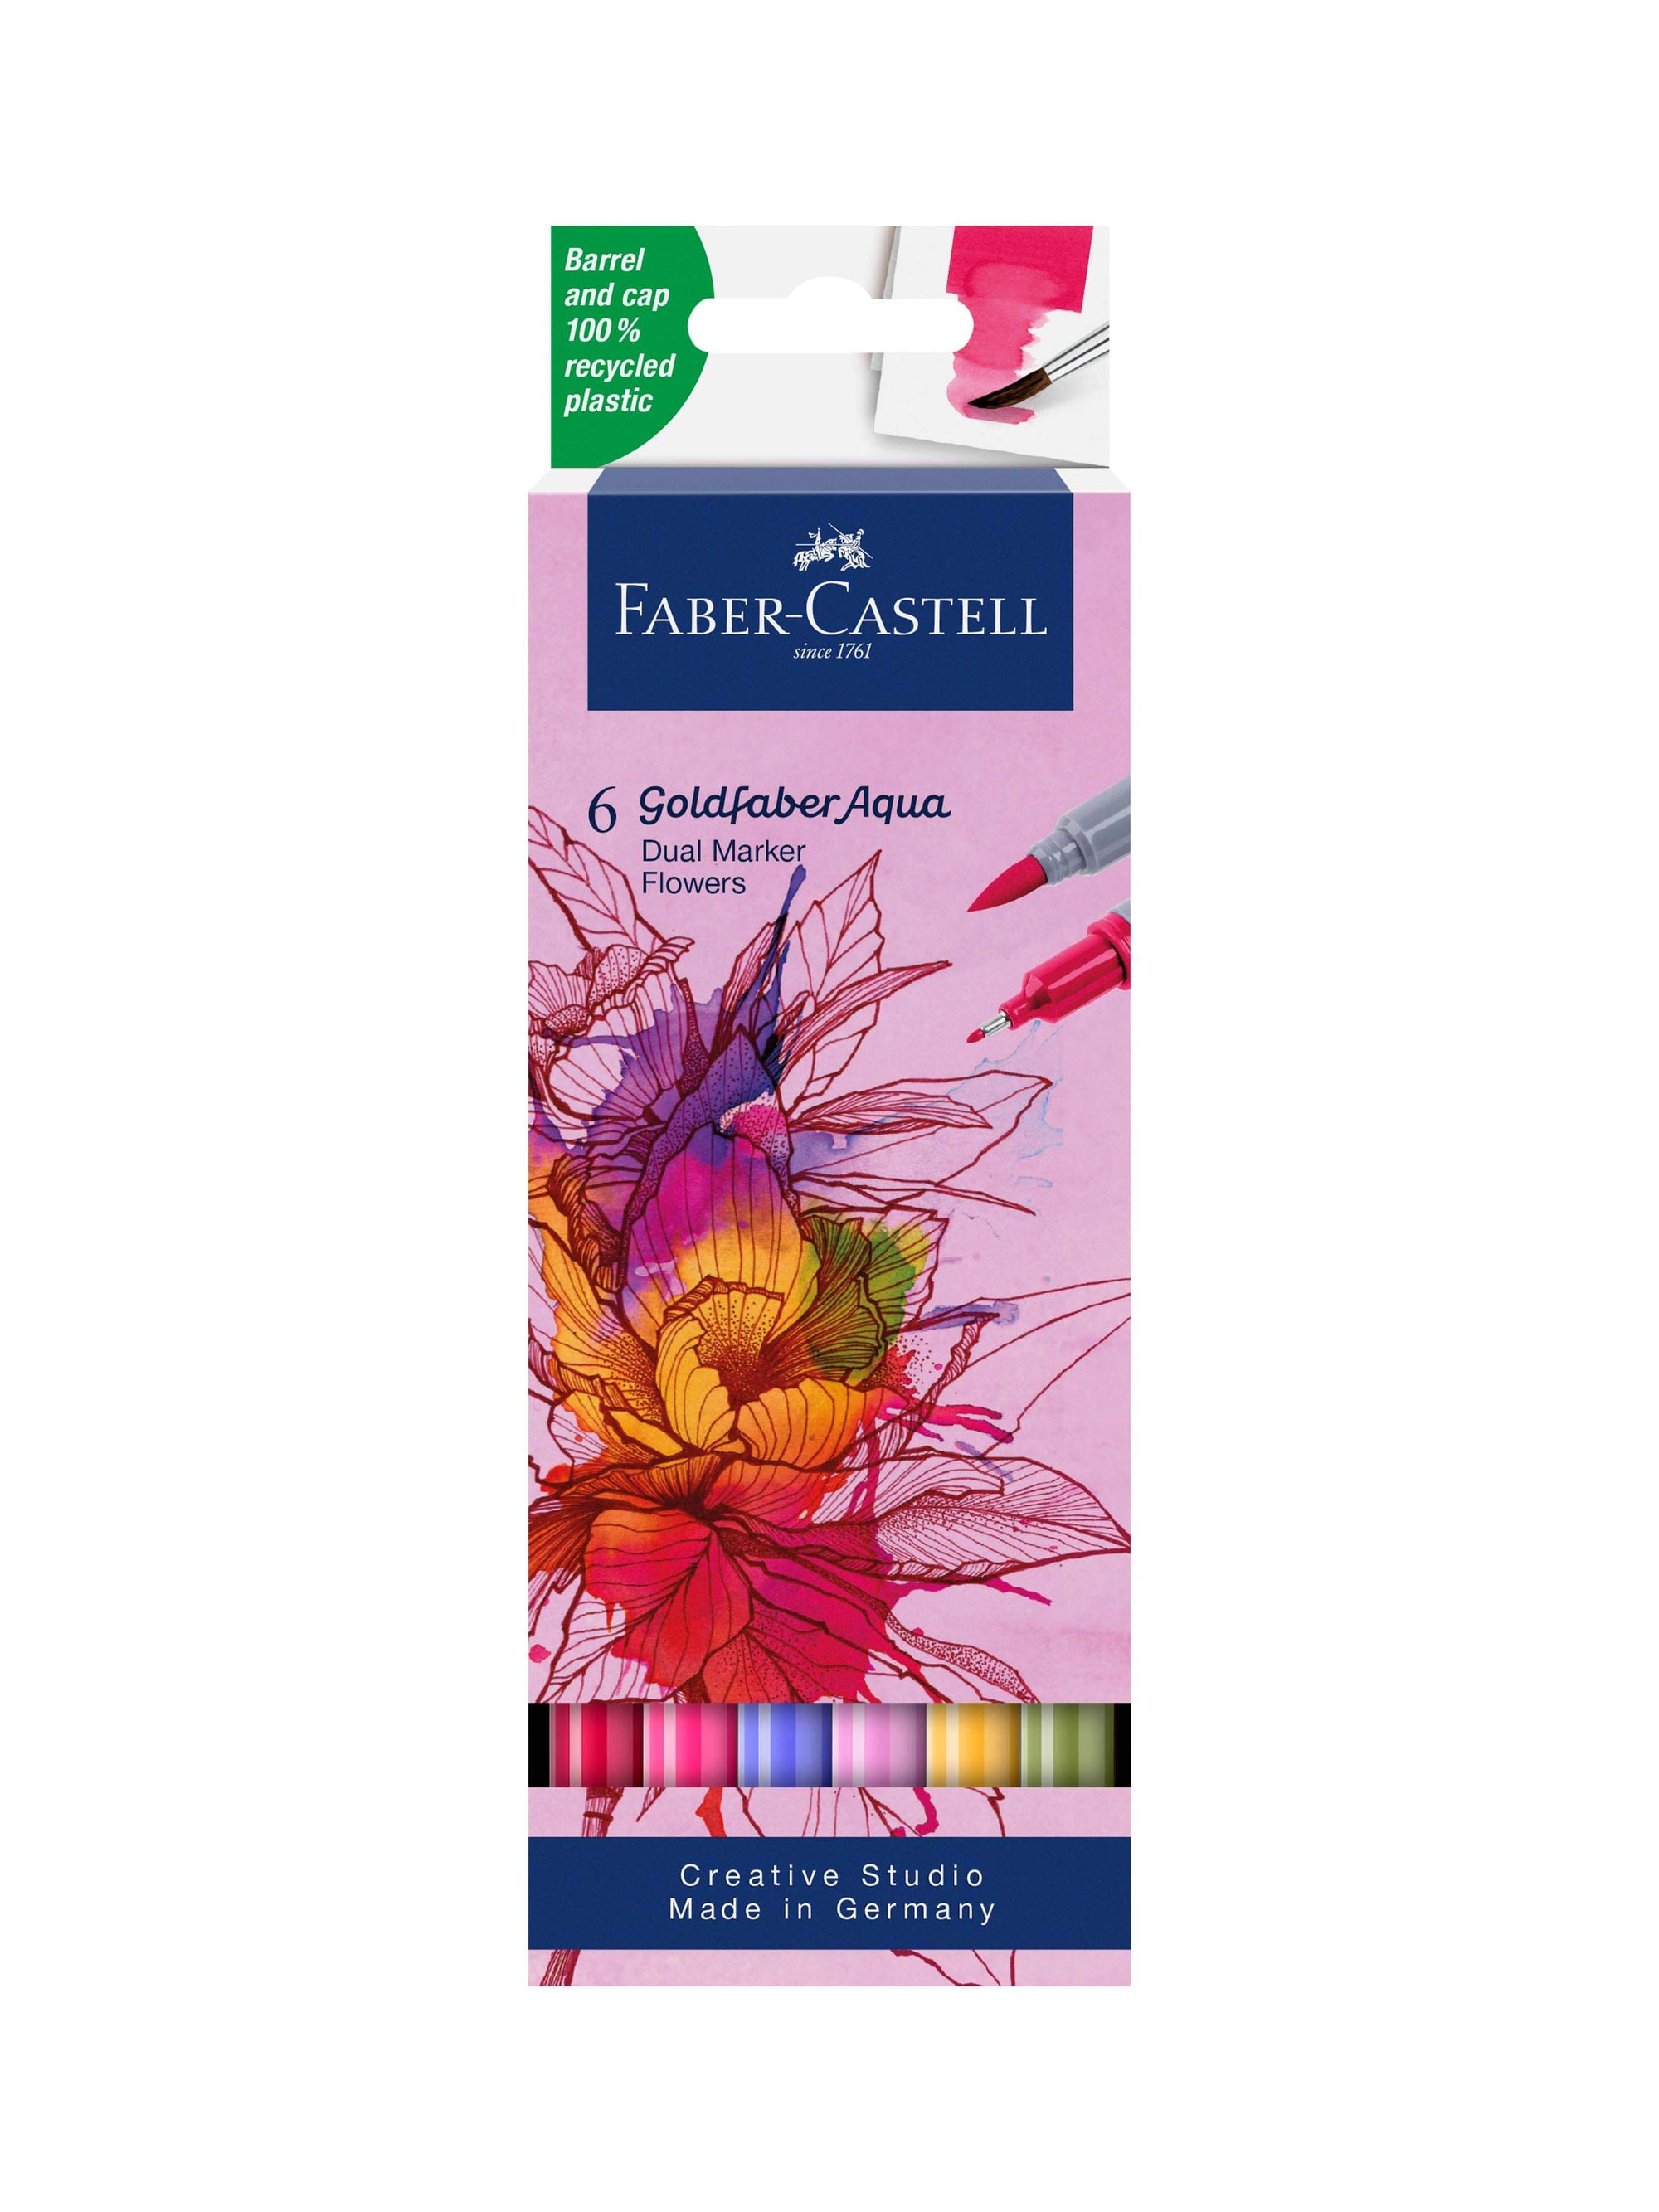 Faber-Castell Goldfaber Aqua Dual Marker Flowers 6pk